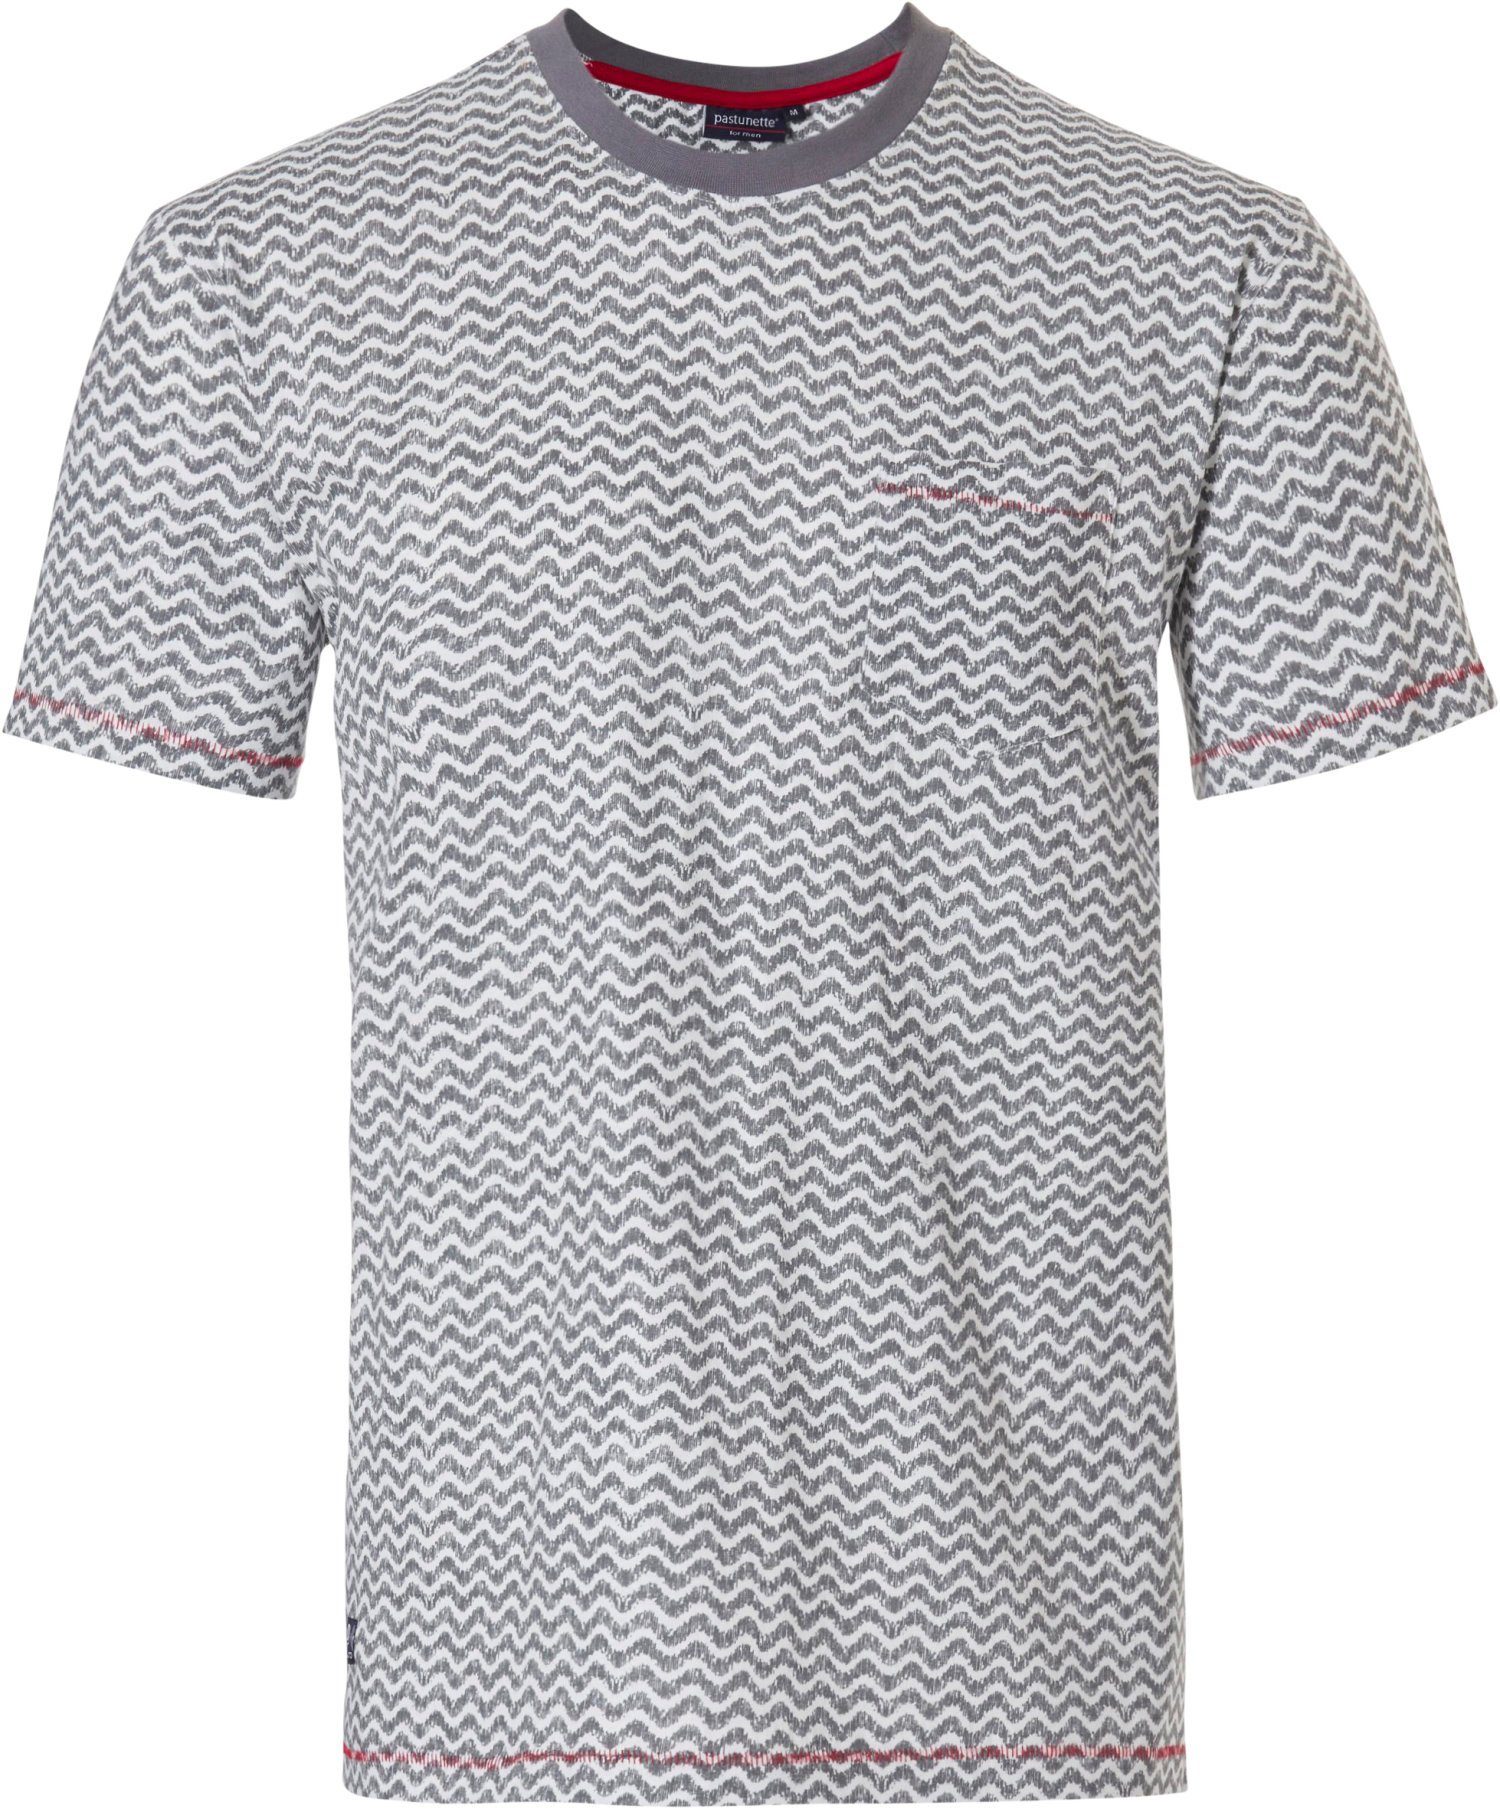 Baumwolle, Pyjamashirt Pyjamaoberteil Pyjama Pastunette (1-tlg) Shirt Herren grey